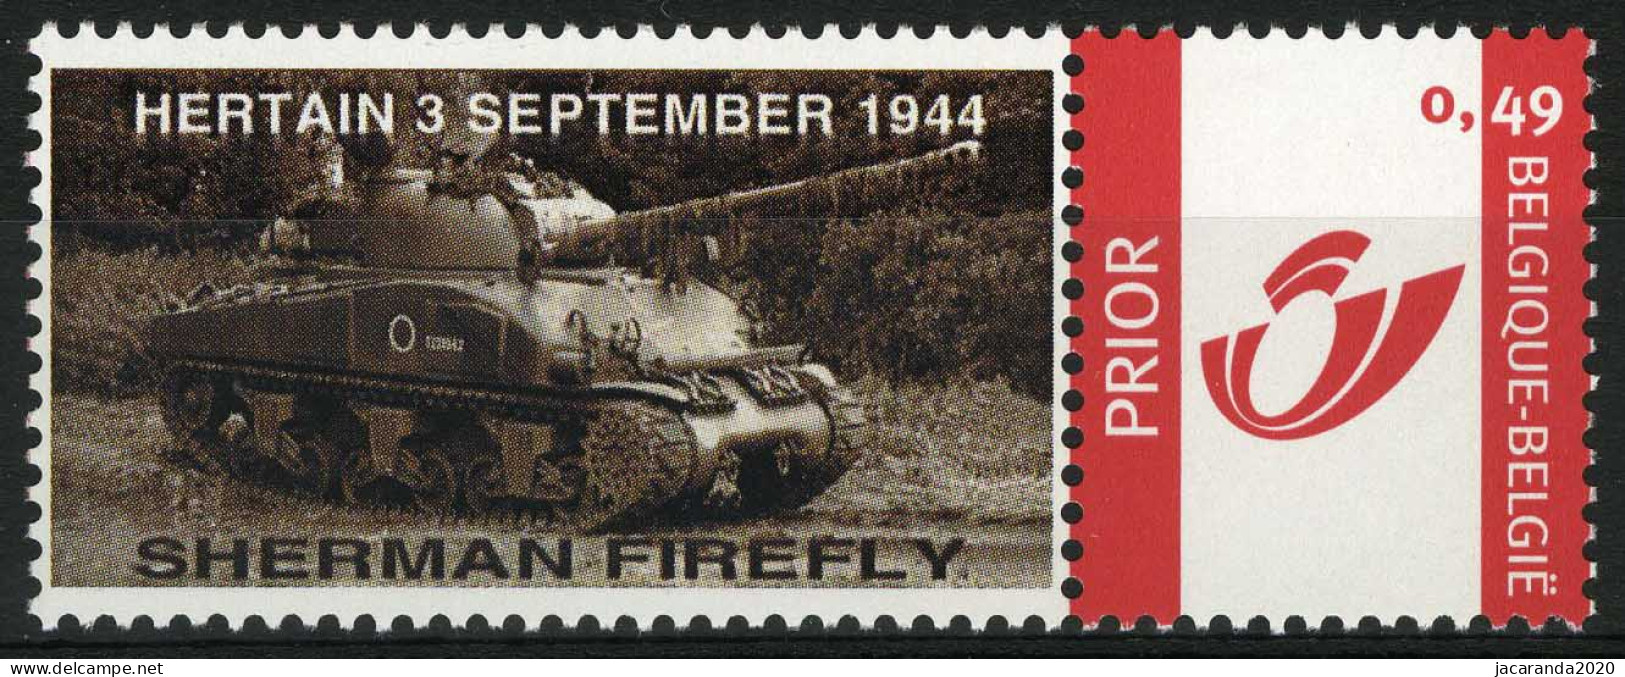 België 3183 - Duostamp - Shireman Firefly - Oorlog - Tank - Hertain 3 September 1944 - Nuovi